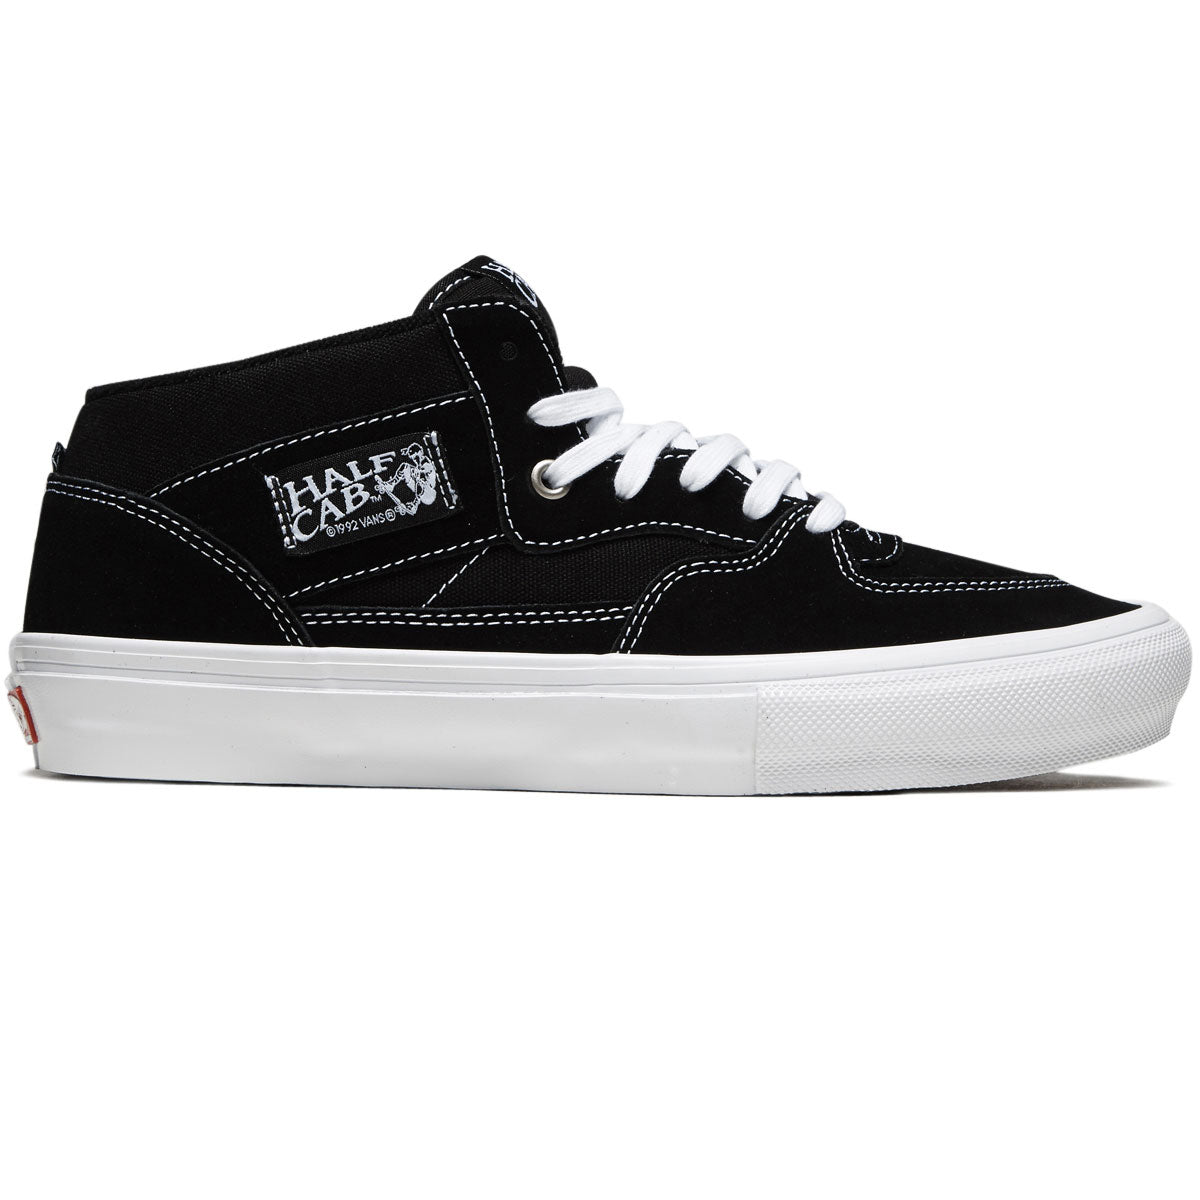 Vans Skate Half Cab Shoes - Black/White image 1